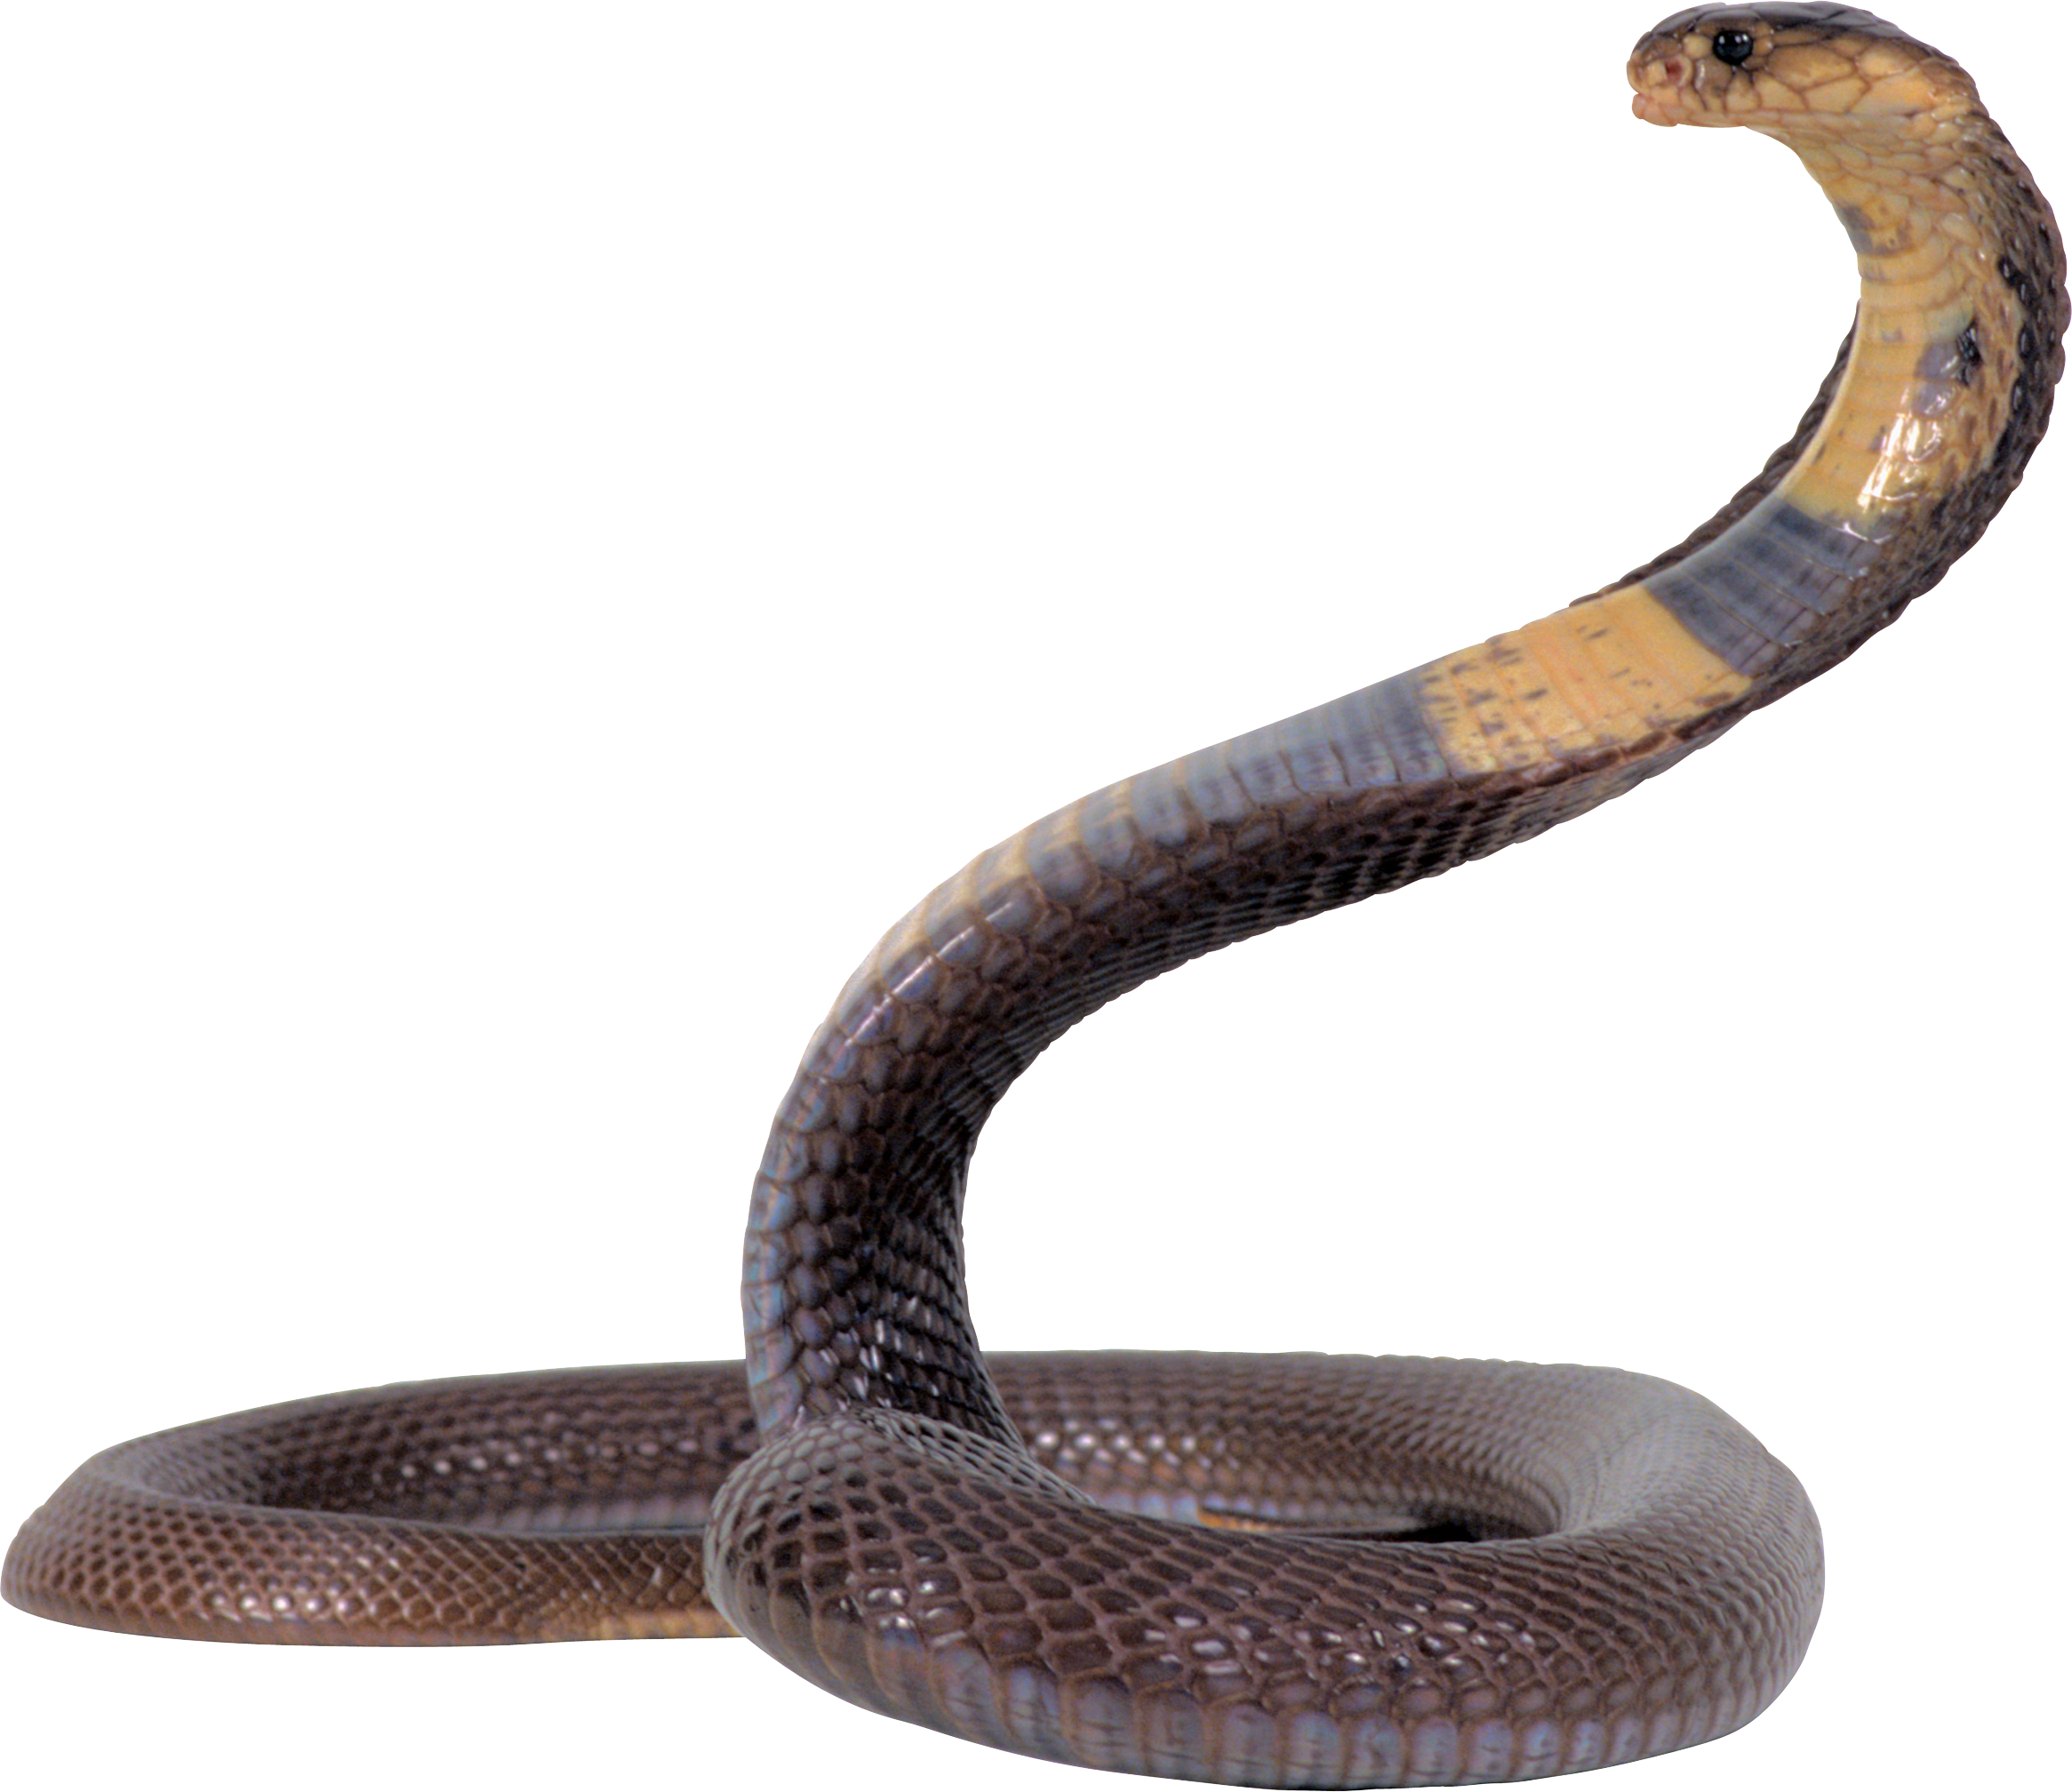 Cobra Snake PNG HD-PlusPNG.co